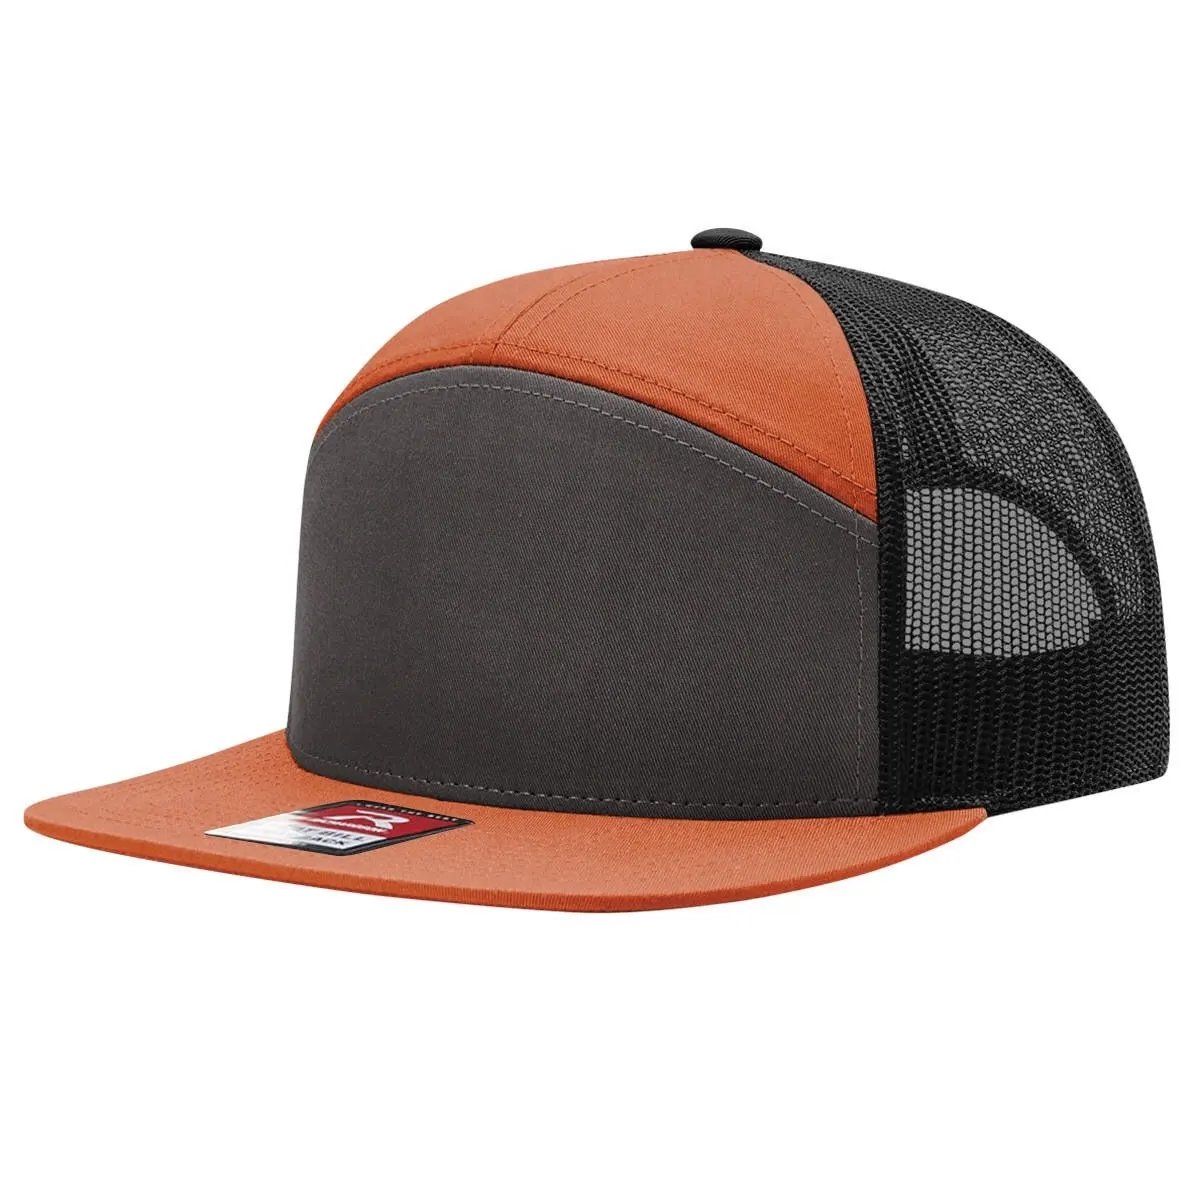 OEMハットスナップバック野球帽フラットビルキャップと帽子ユニセックスファブリック機能大人起源ジェンダースポーツキャップ